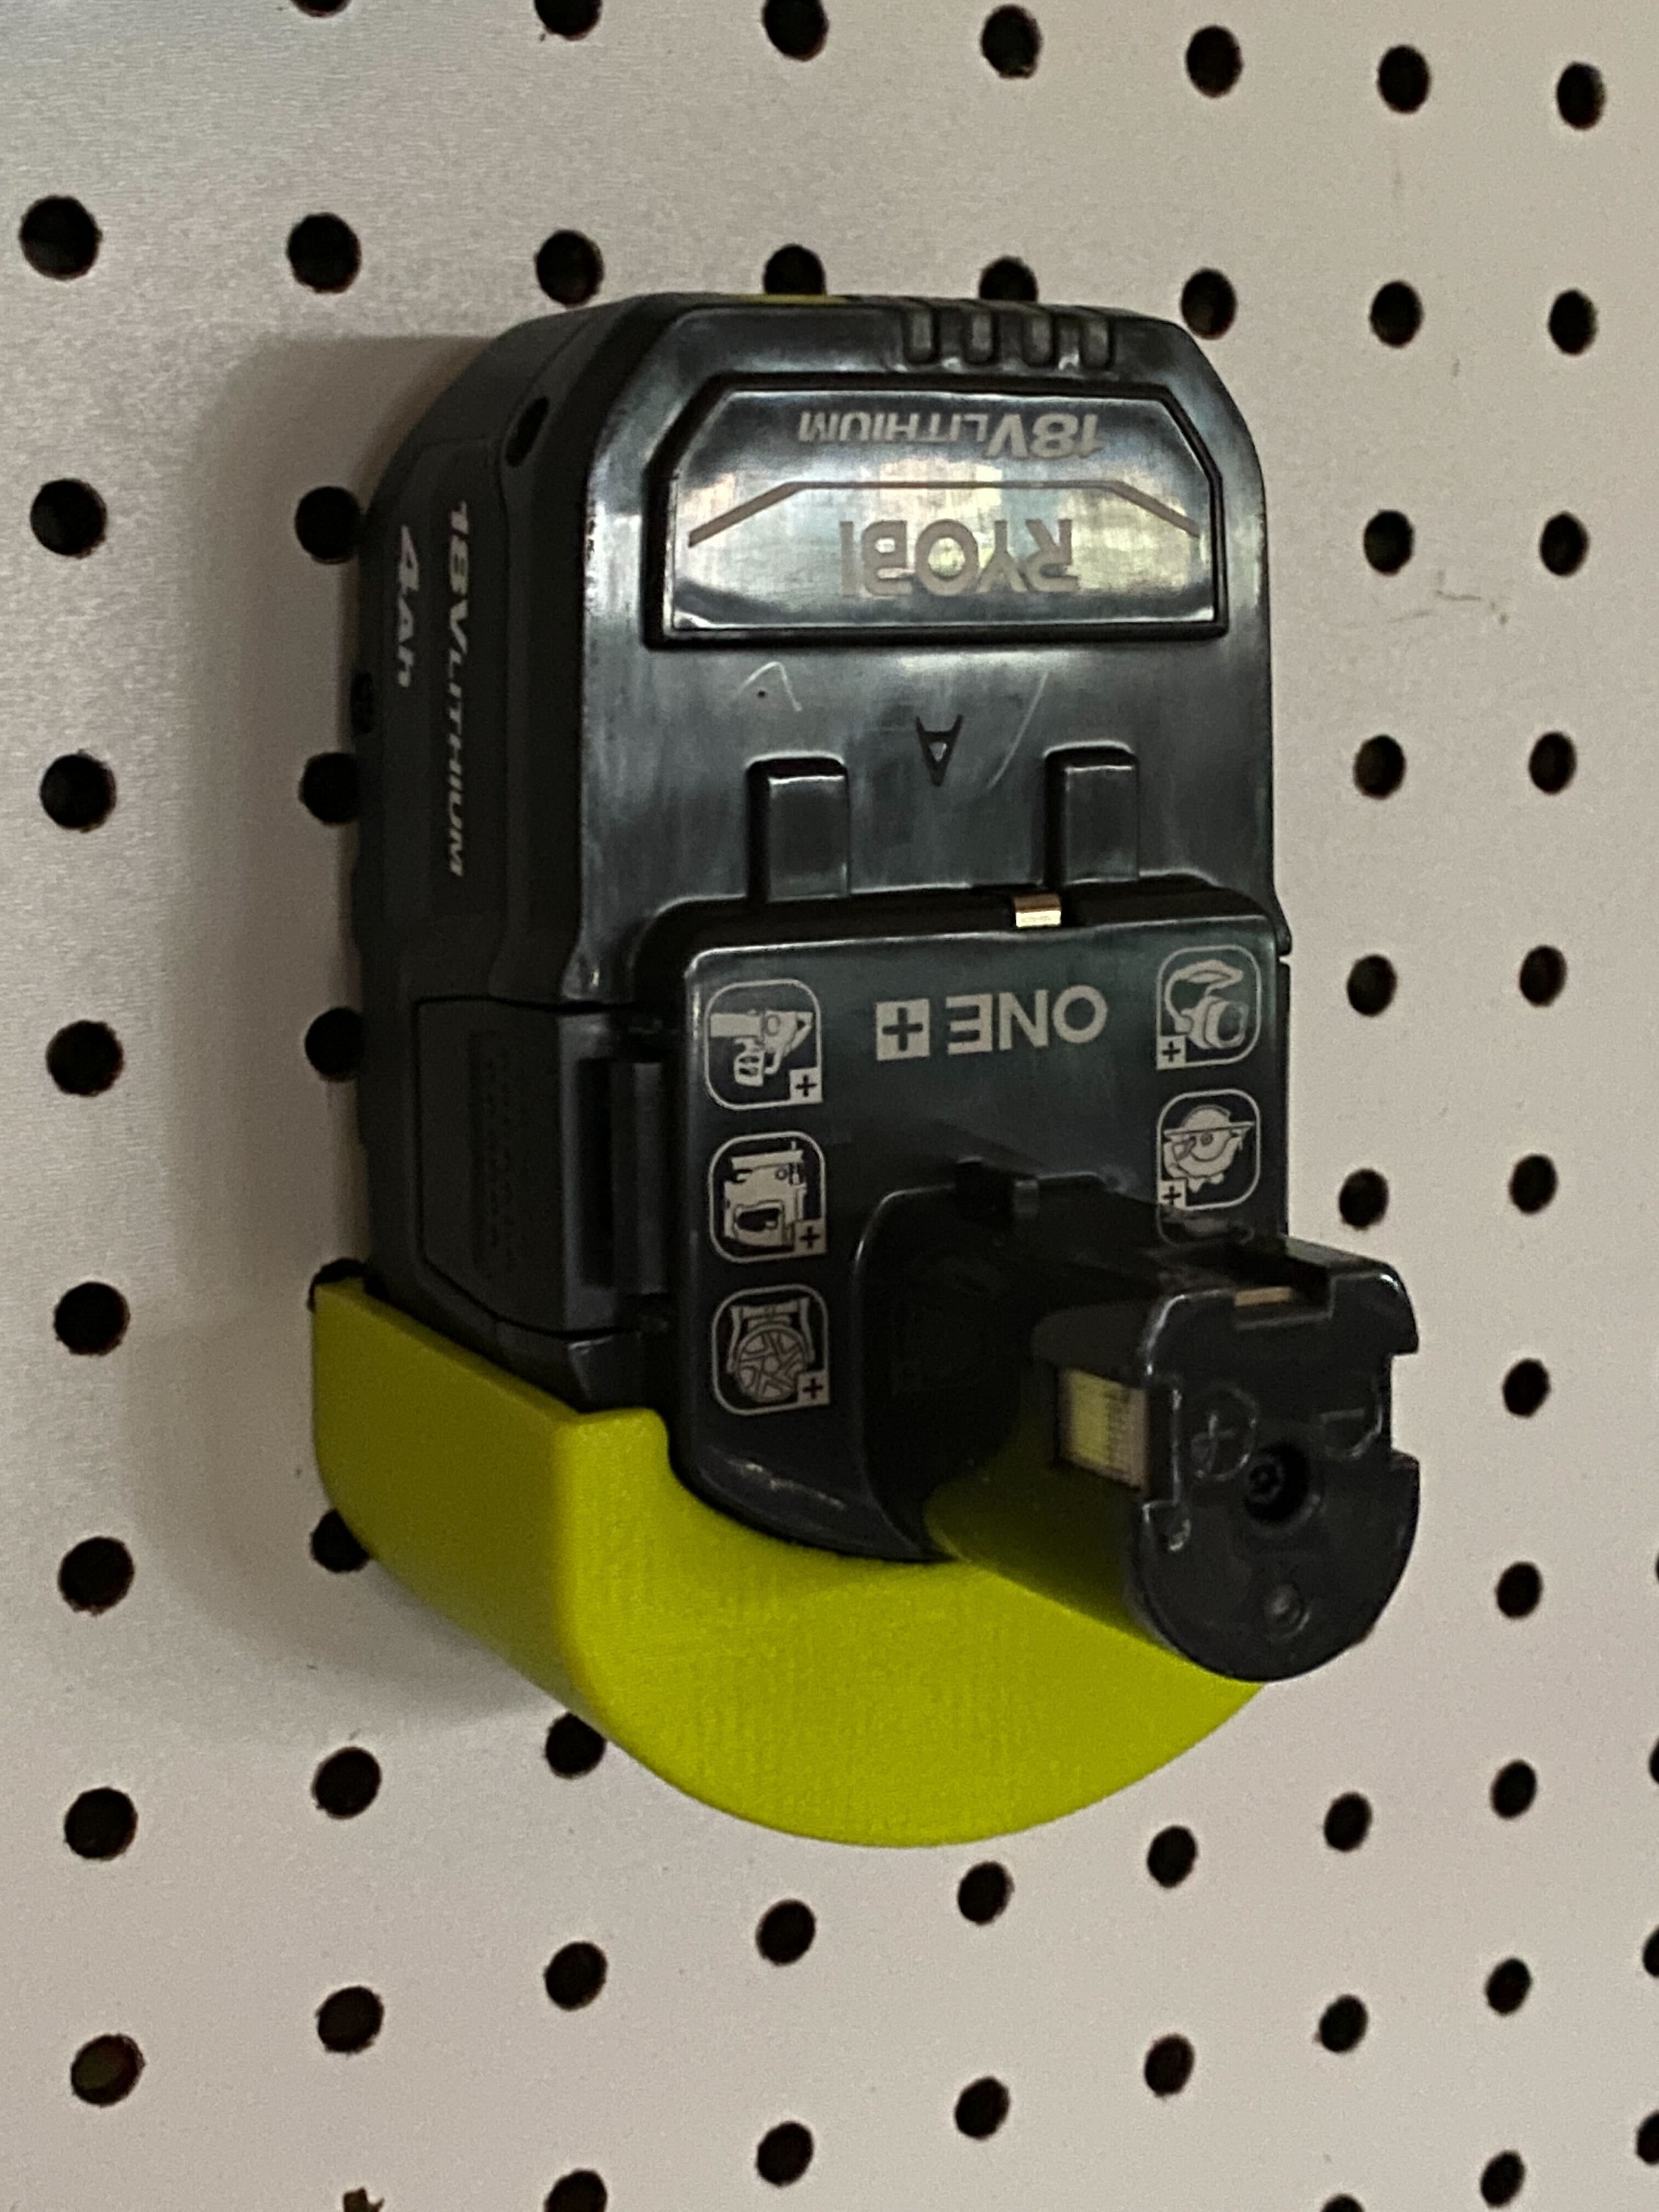 pegboard holder for Ryobi One+ 4Ah battery